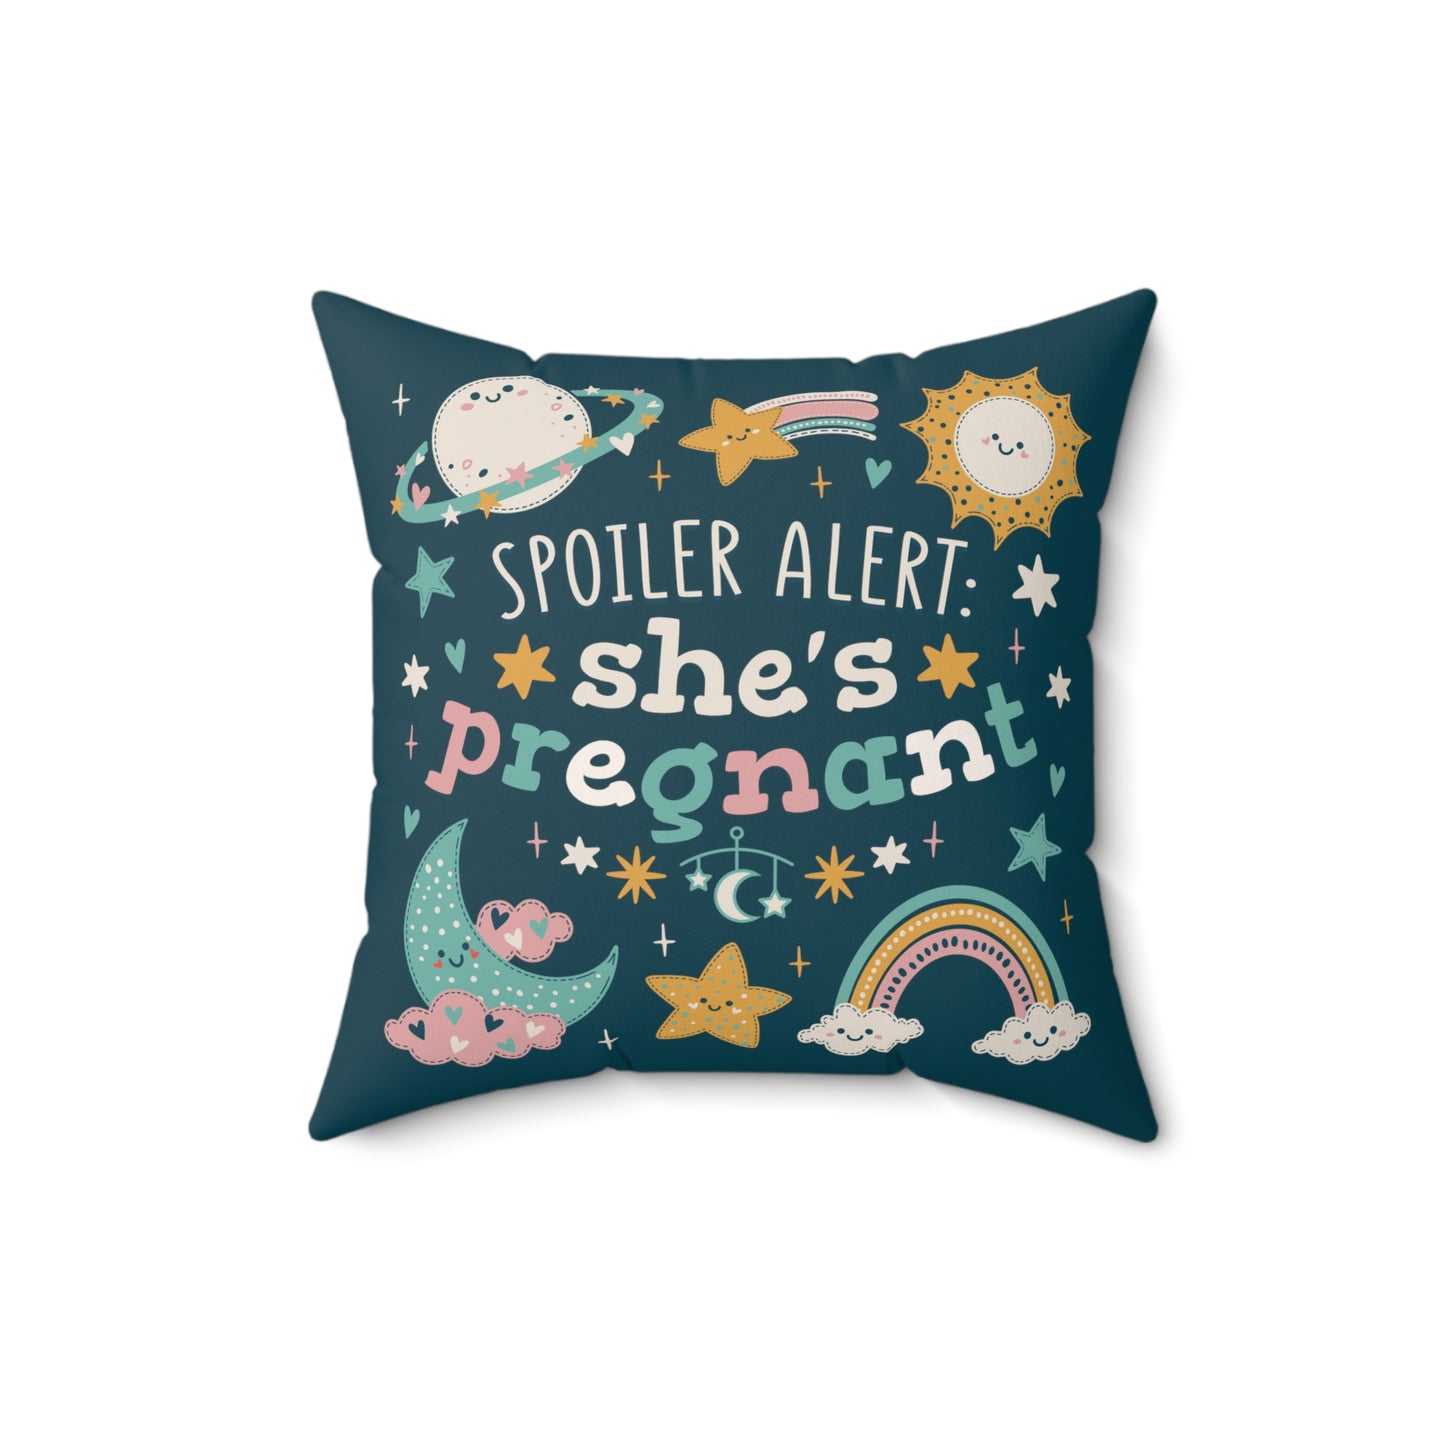 Spoiler Alert - She's Pregnant Square Pillow